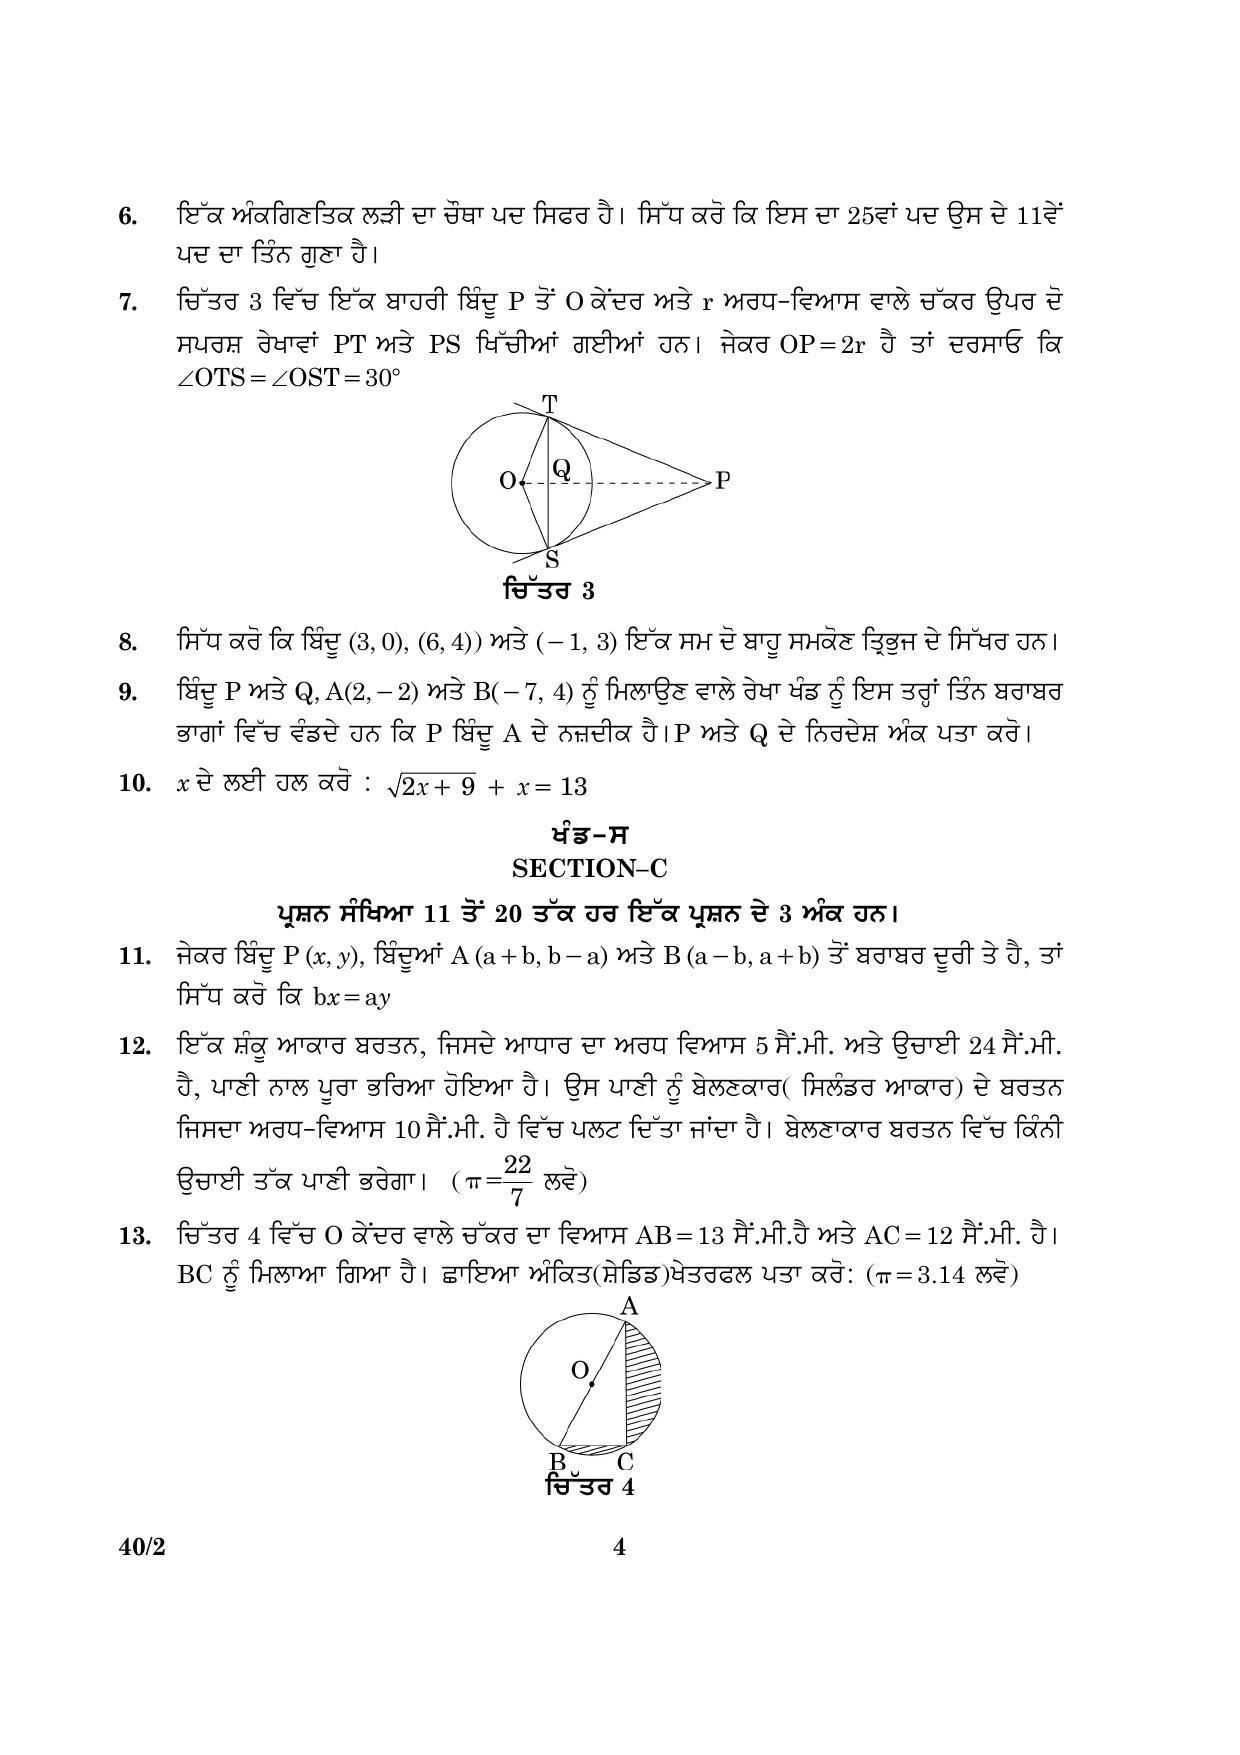 CBSE Class 10 040 Mathematics Punjabi 2 2016 Question Paper - Page 4